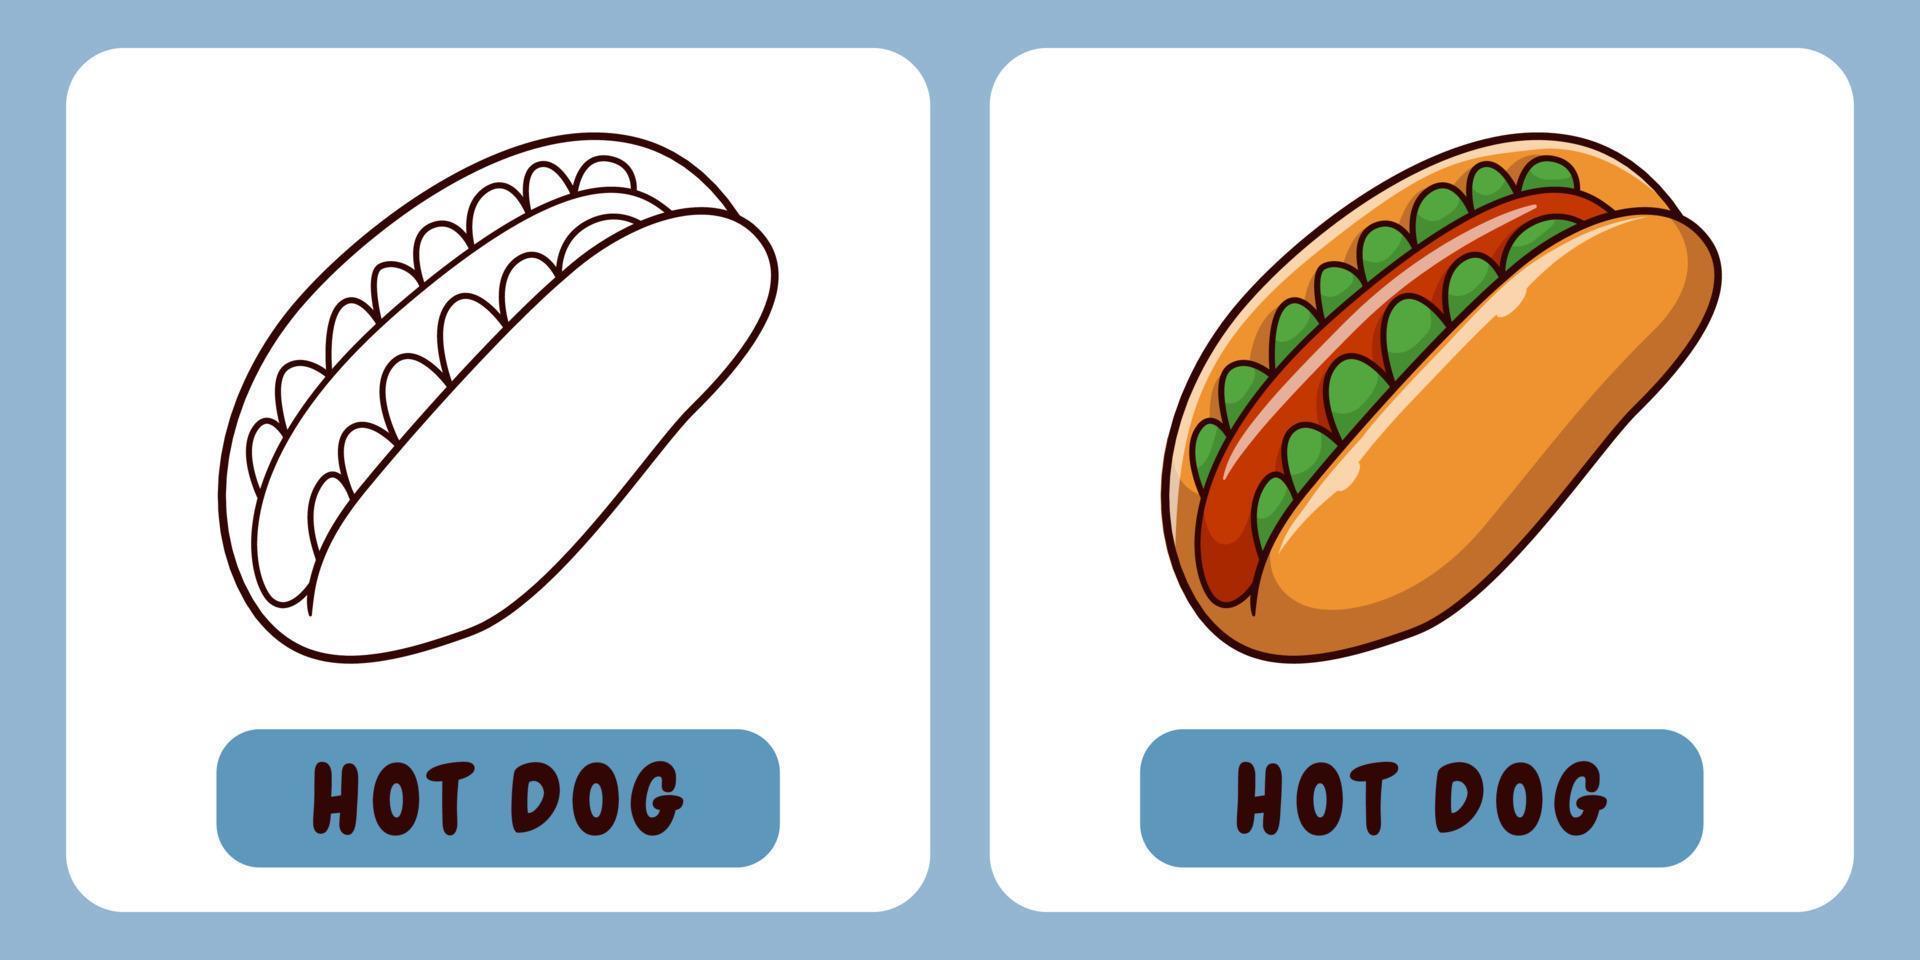 Hot Dog cartoon illustration for children's coloring book vector